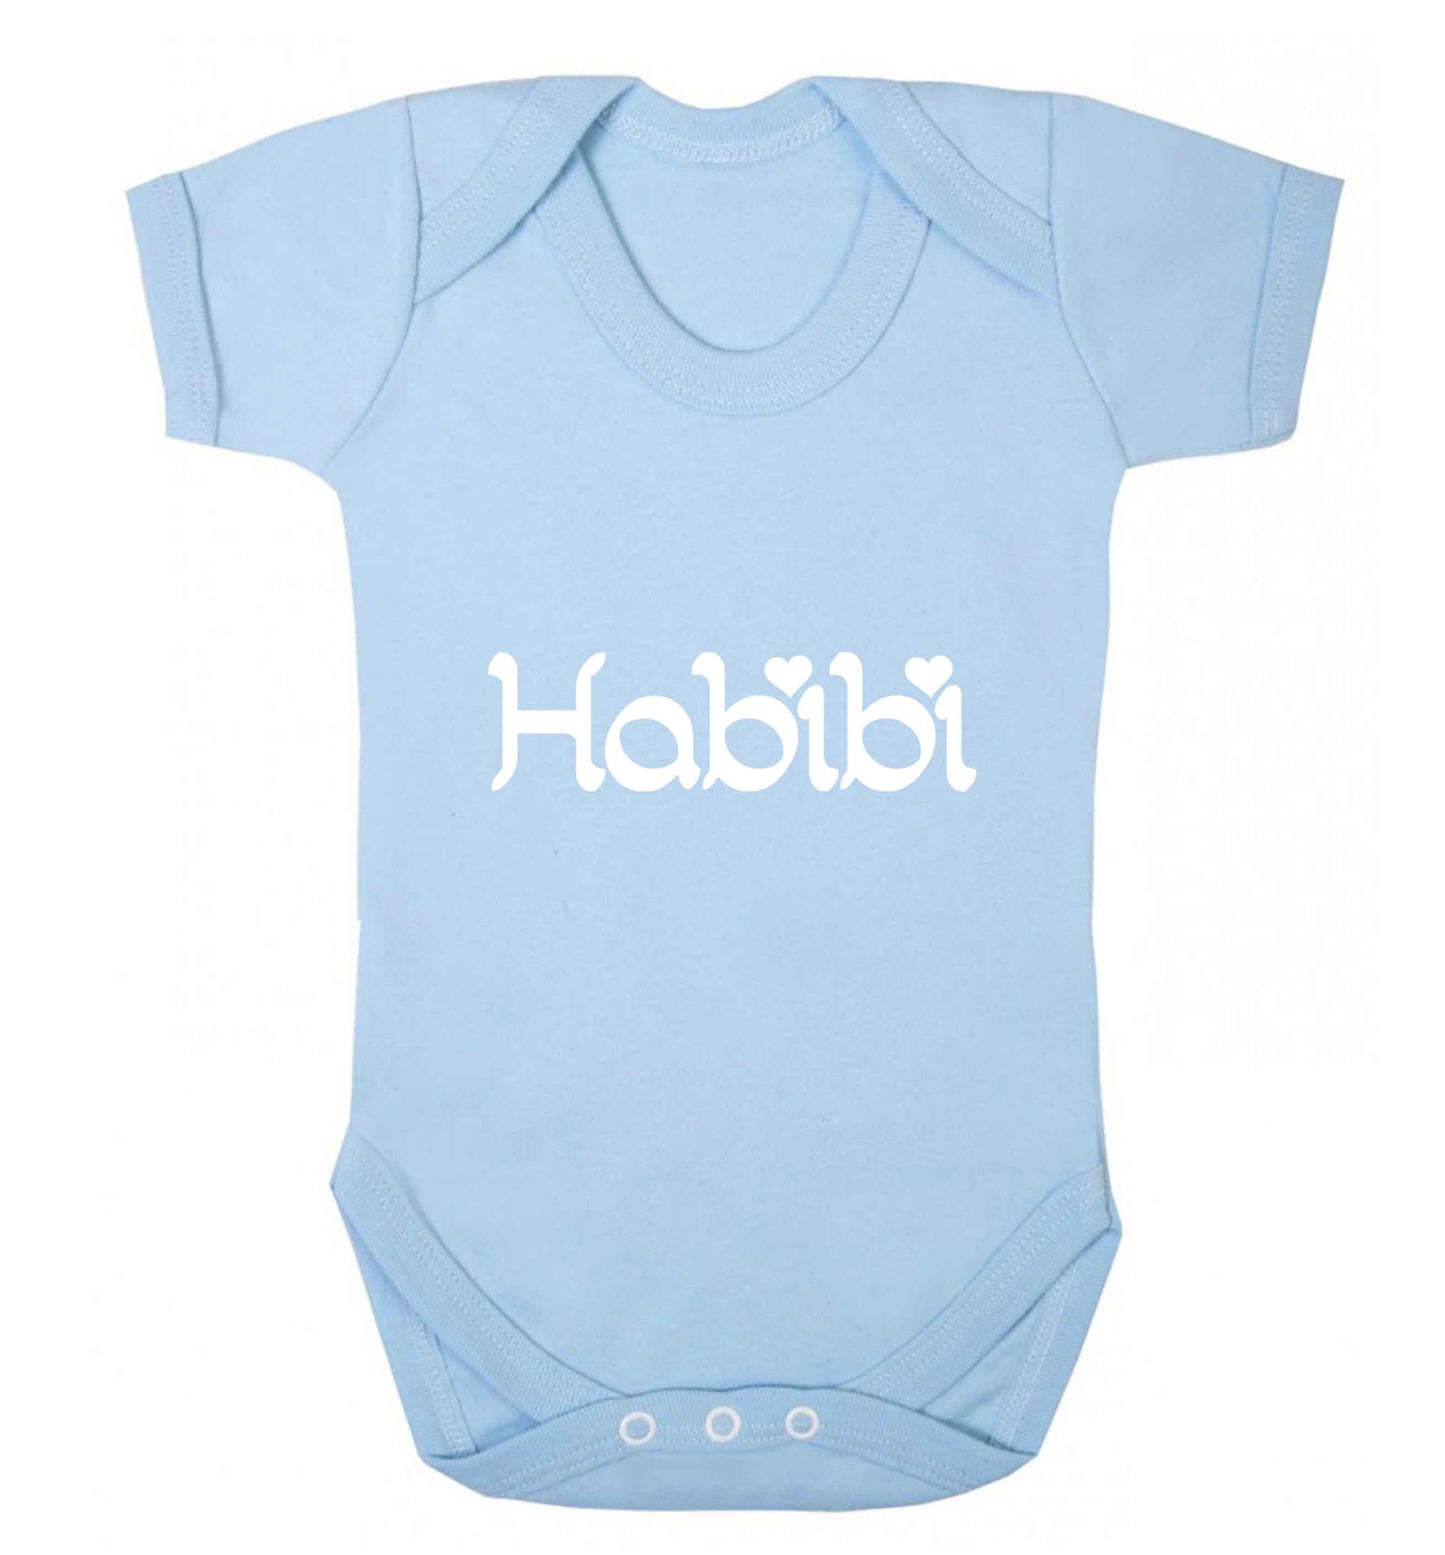 Habibi baby vest pale blue 18-24 months